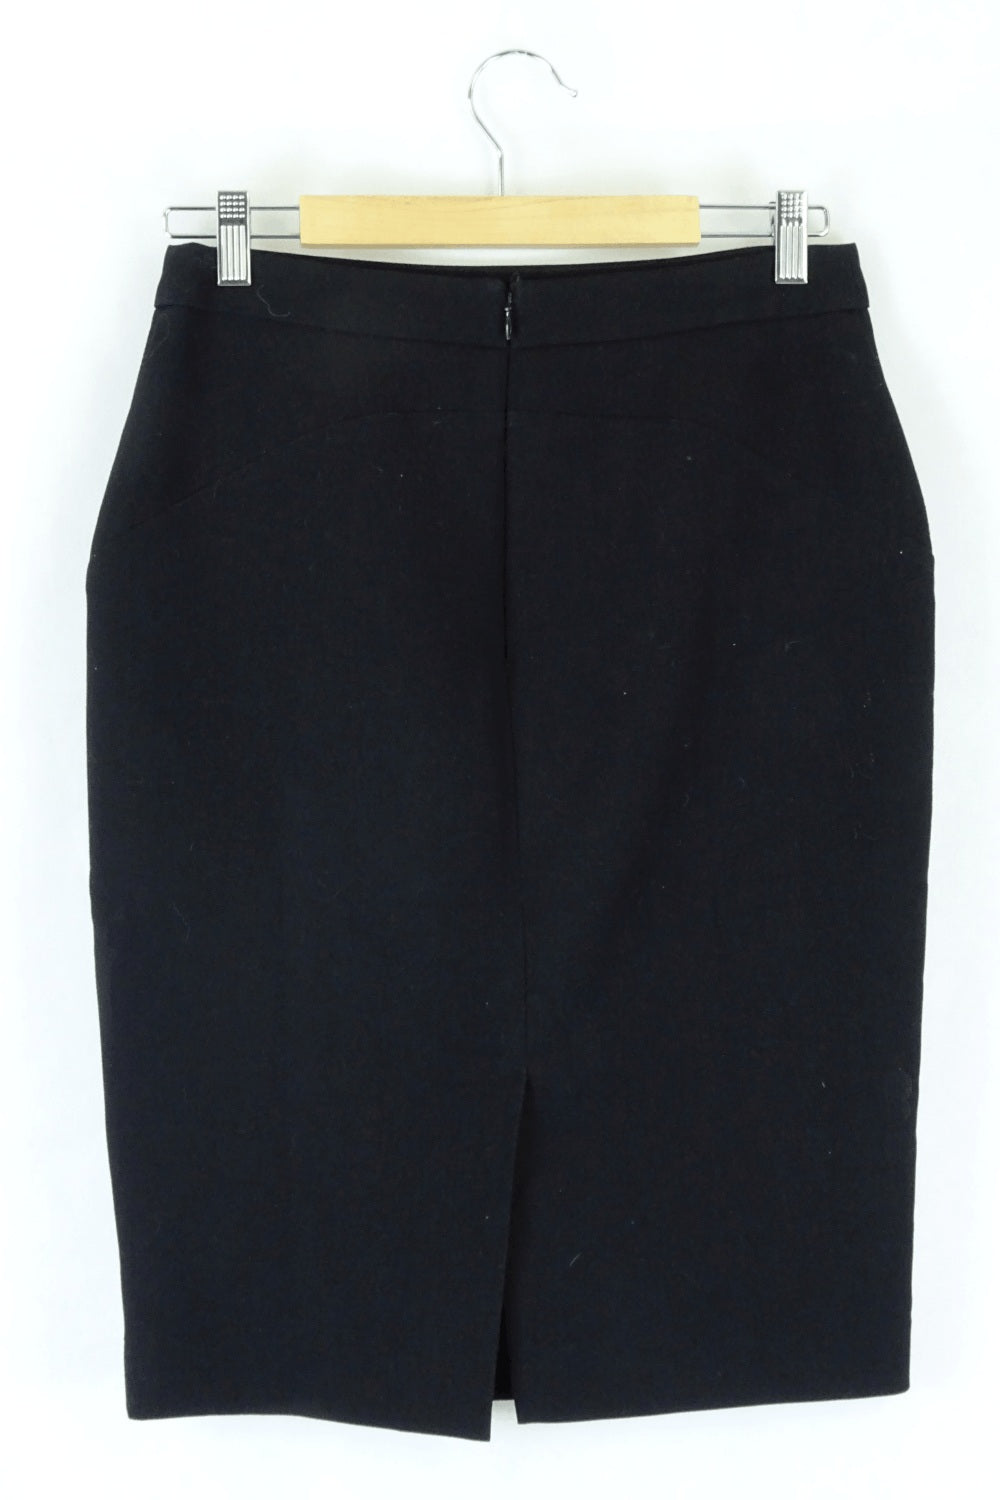 Portmans Black Pencil Skirt with Zip detail  10